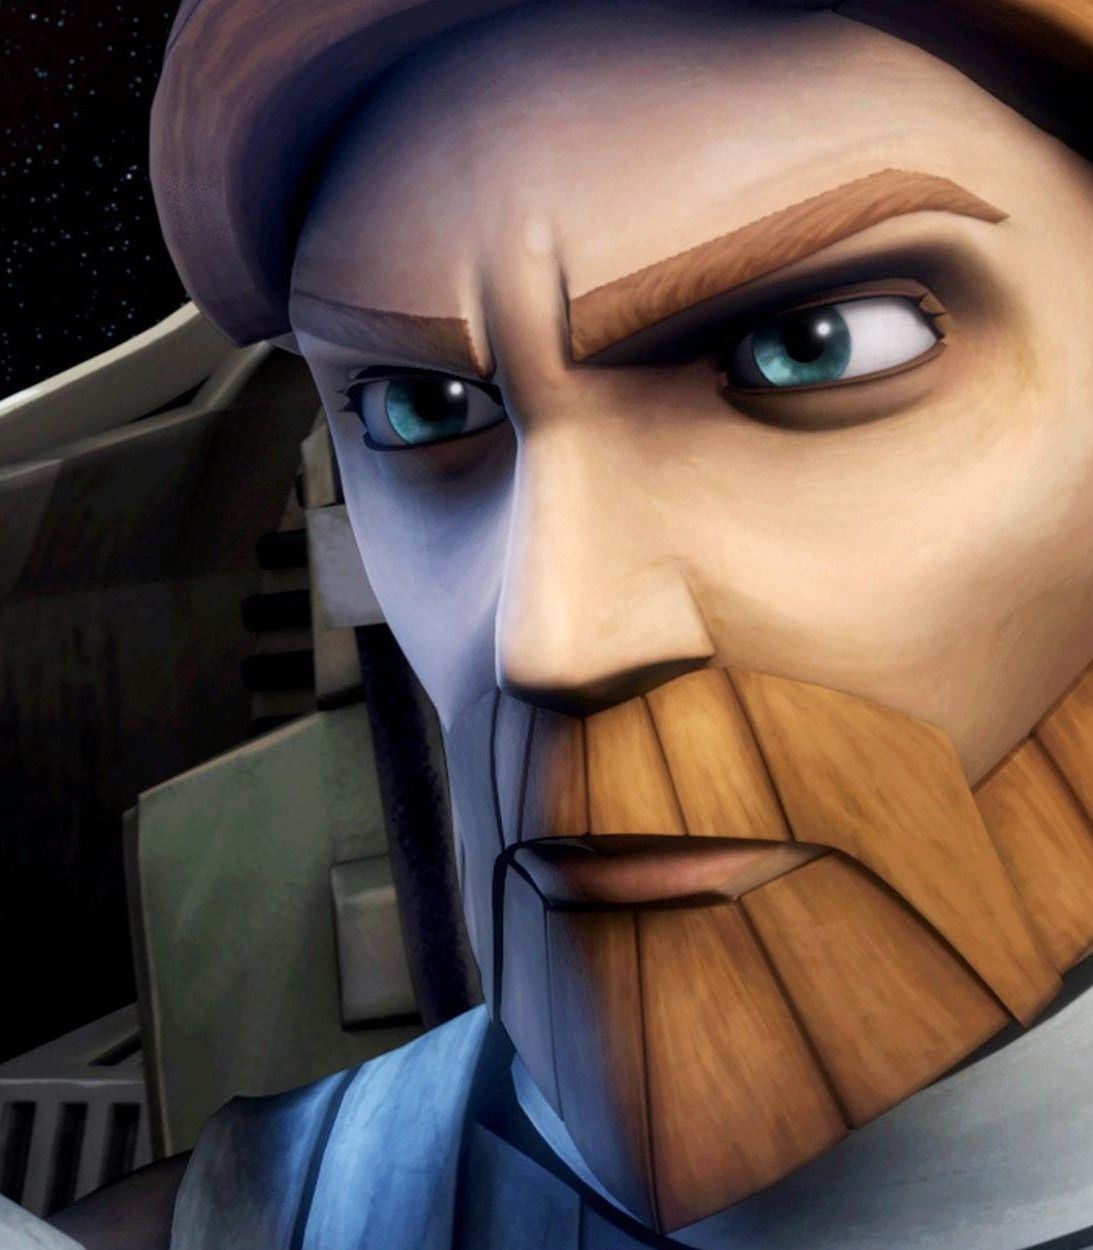 Obi-Wan Kenobi in Star Wars Clone Wars vertical